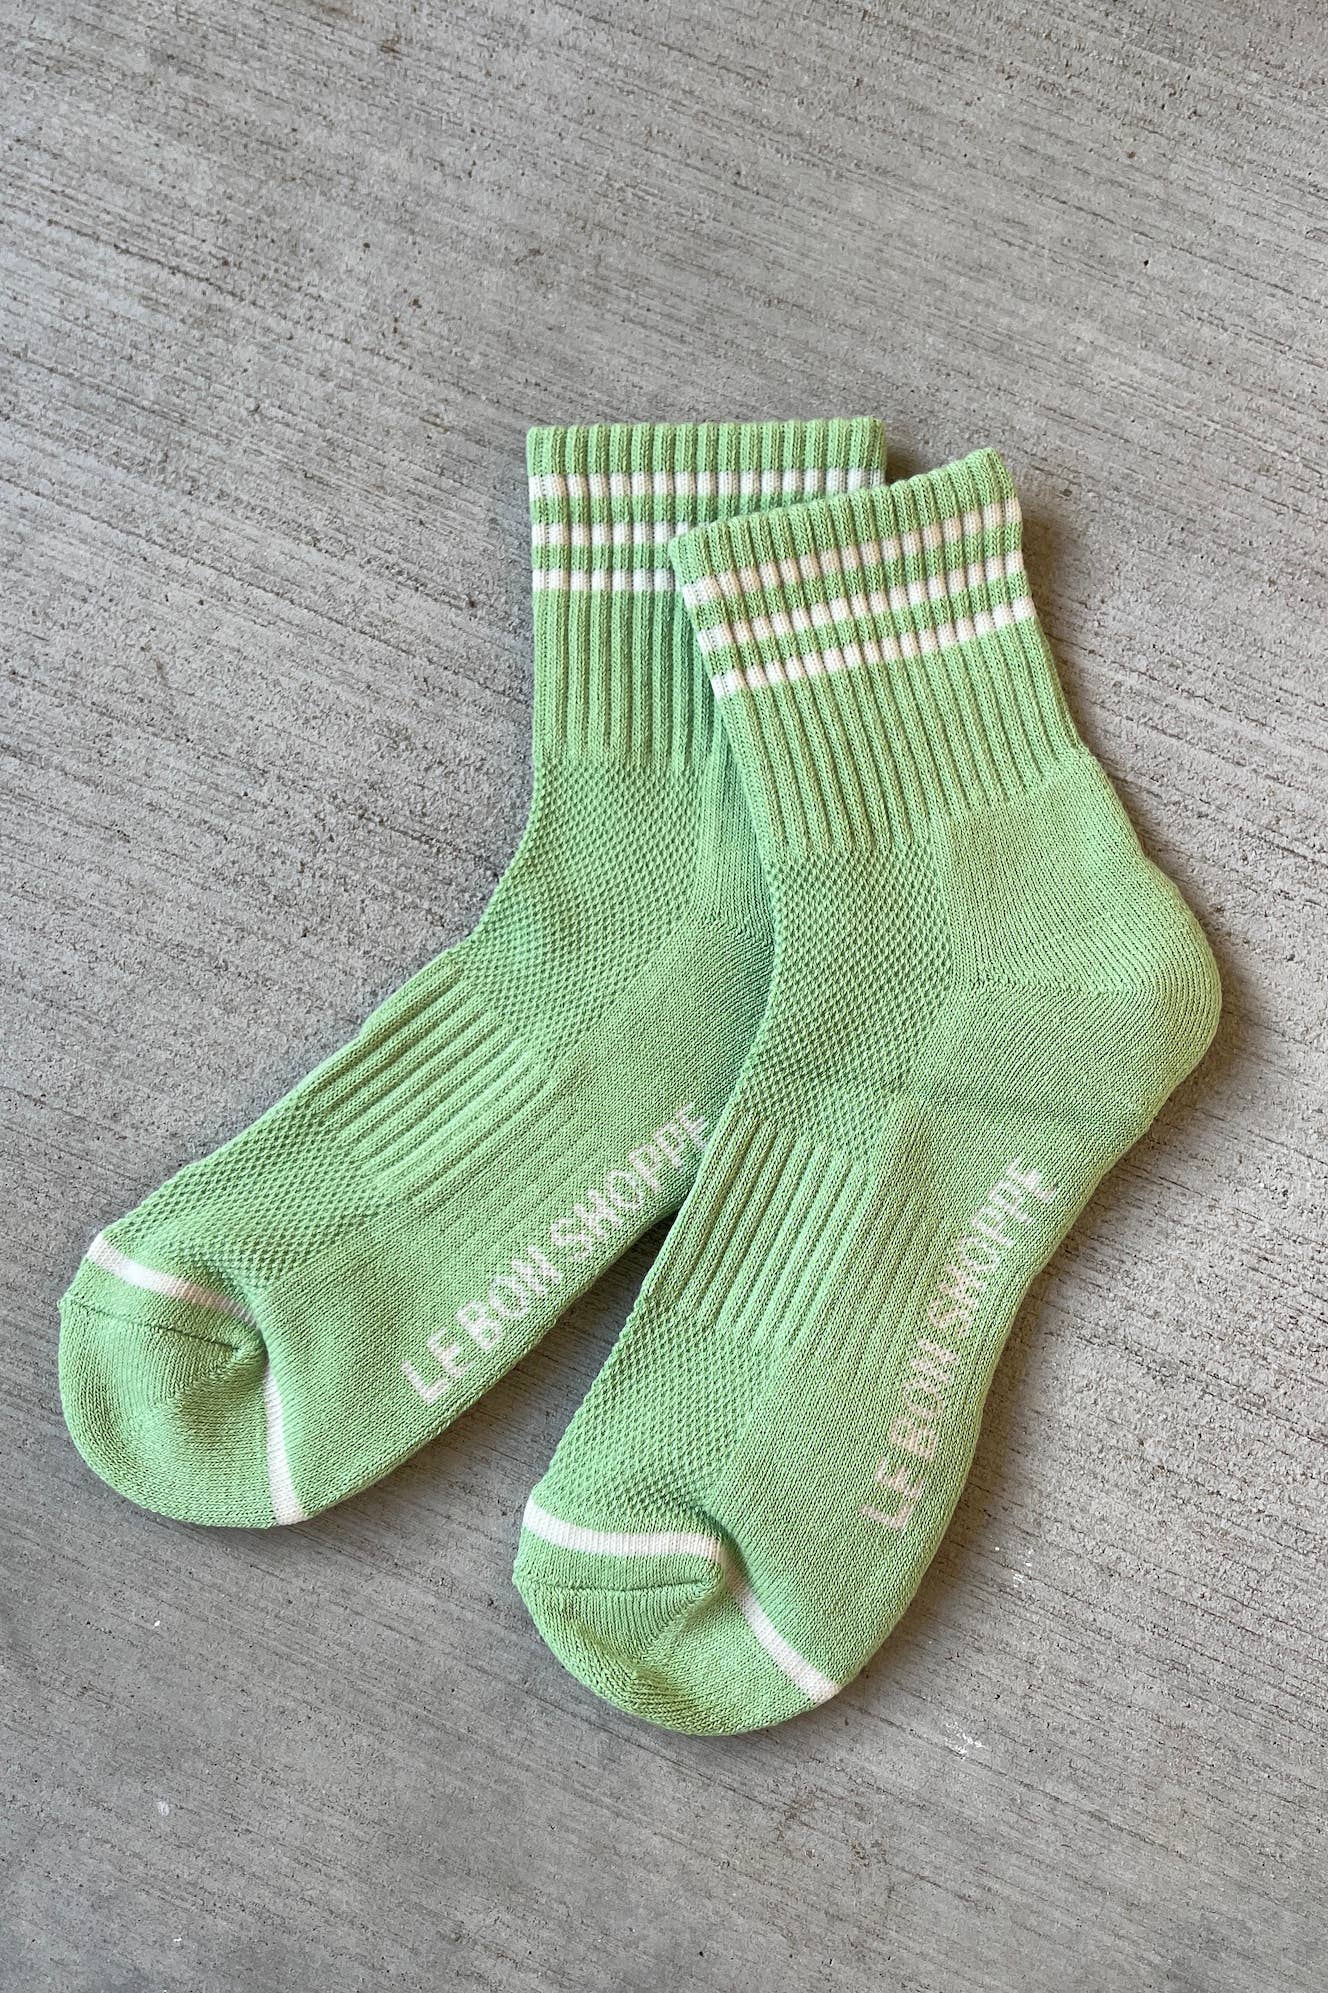 Girlfriend Socks: Green Leaf